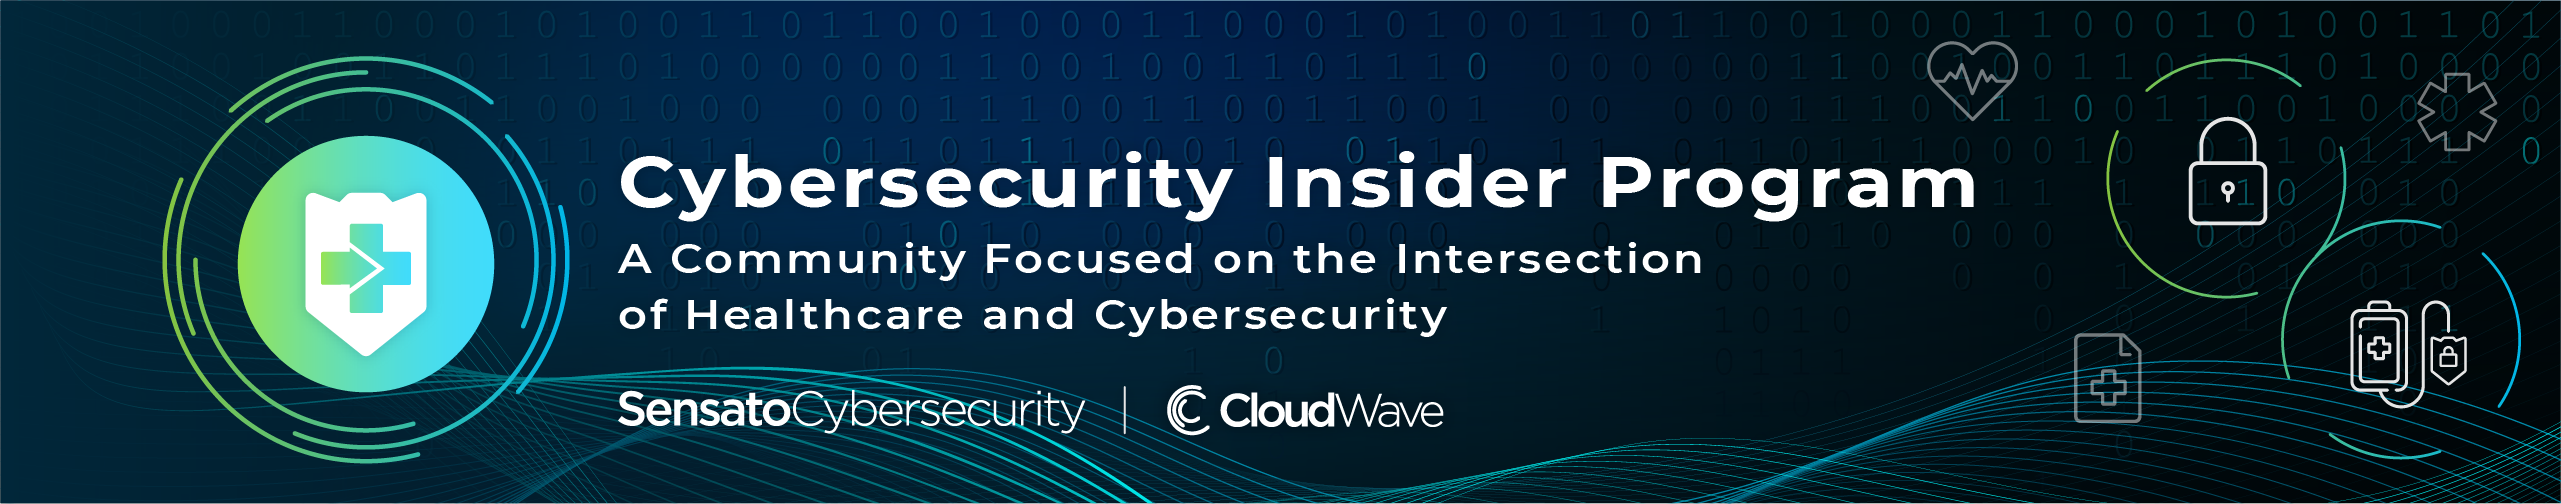 Cybersecurity Insider Program: SensatoCybersecurity 